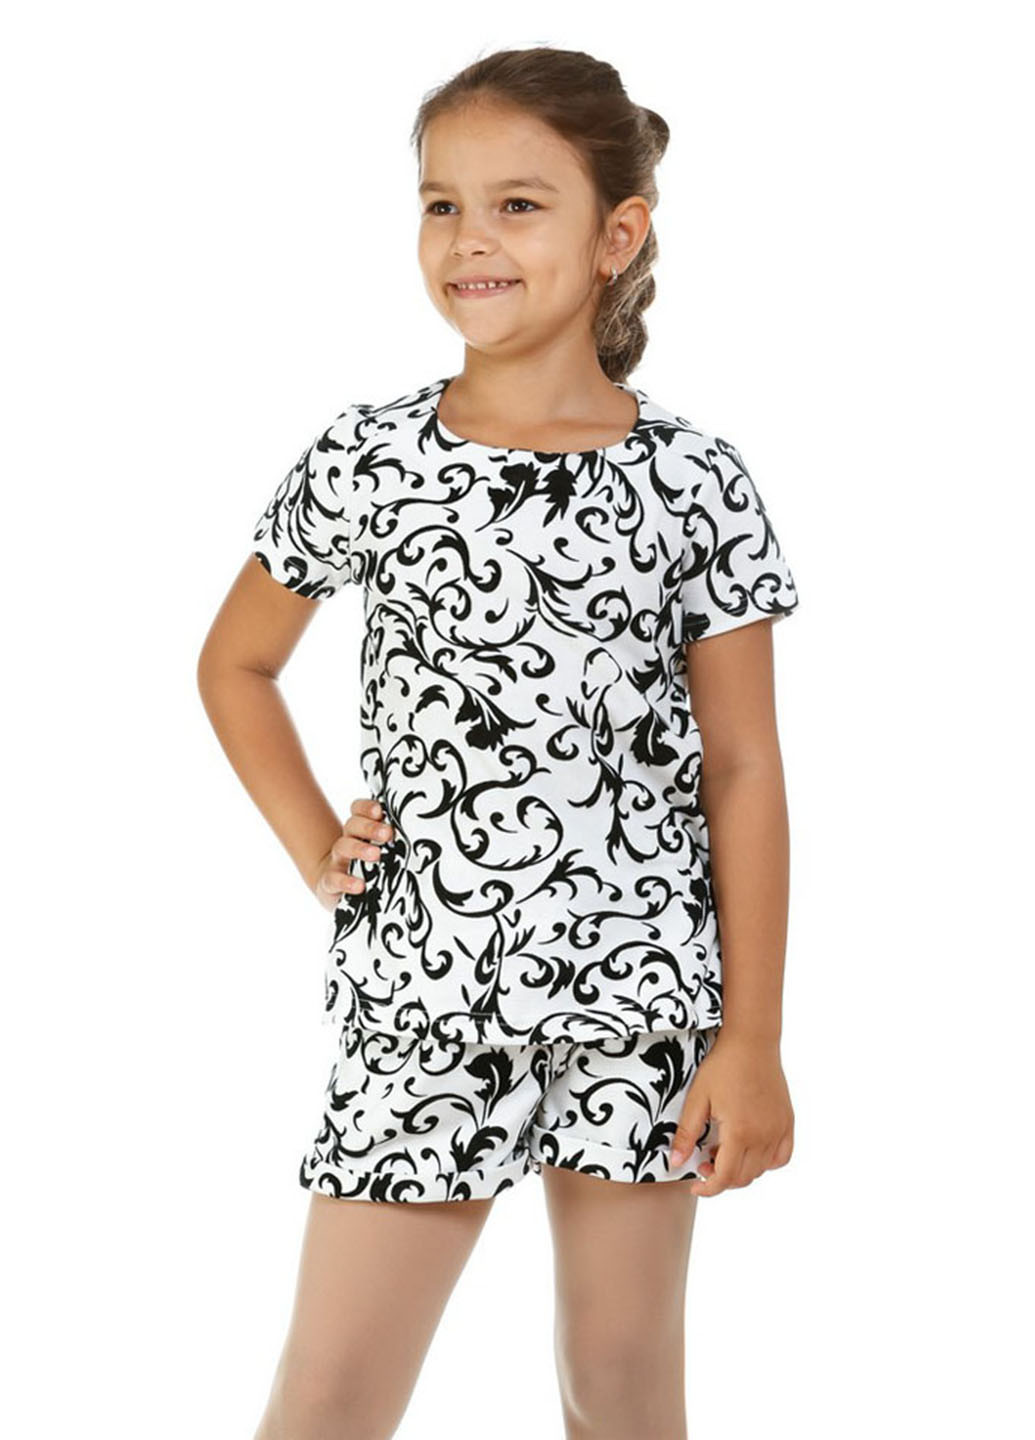 Белая с рисунком блузка с коротким рукавом Kids Couture летняя